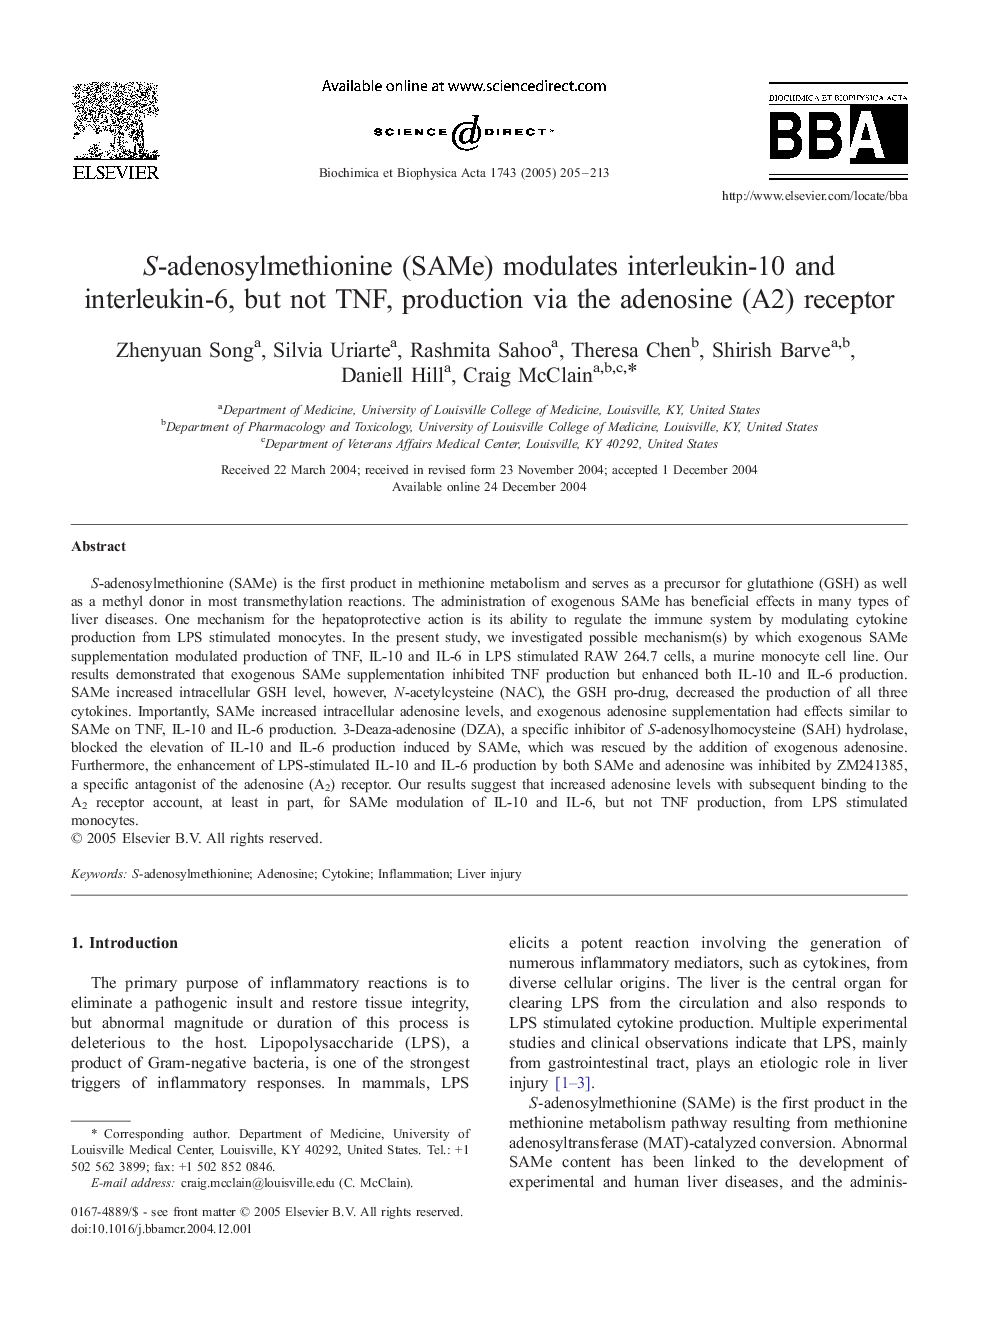 S-adenosylmethionine (SAMe) modulates interleukin-10 and interleukin-6, but not TNF, production via the adenosine (A2) receptor